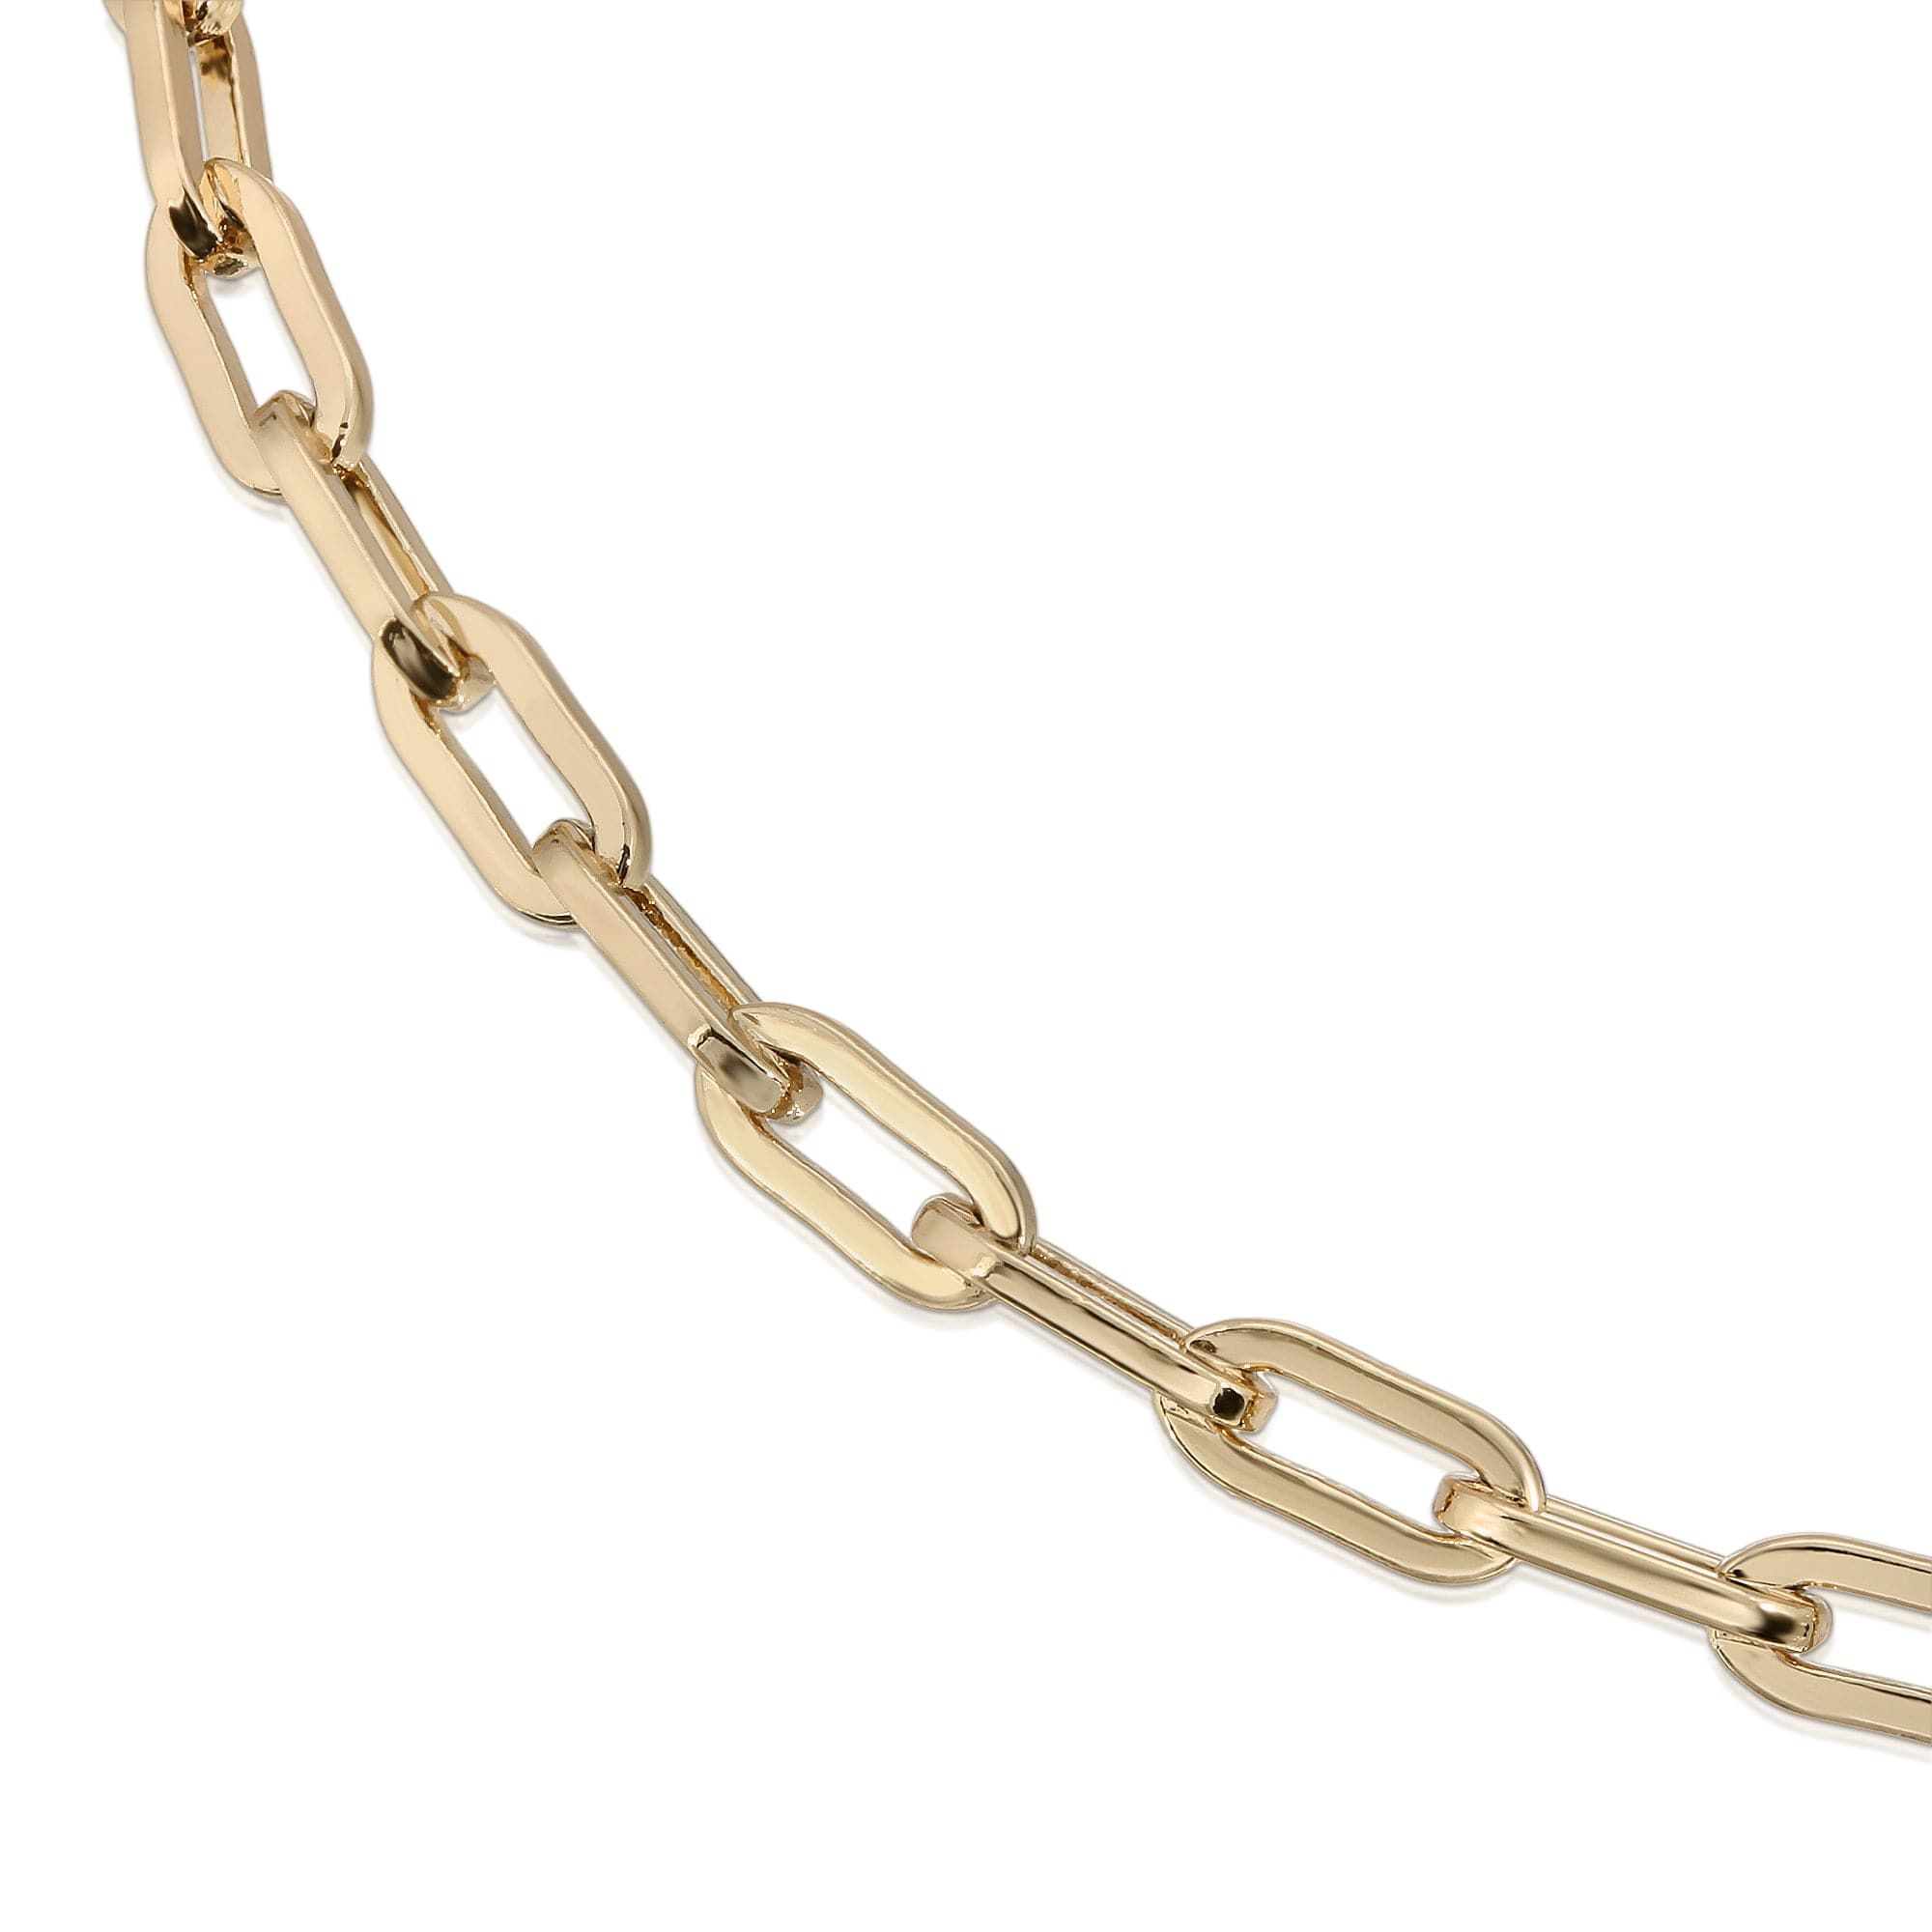 Medium Link Chain Bracelet - eklexic